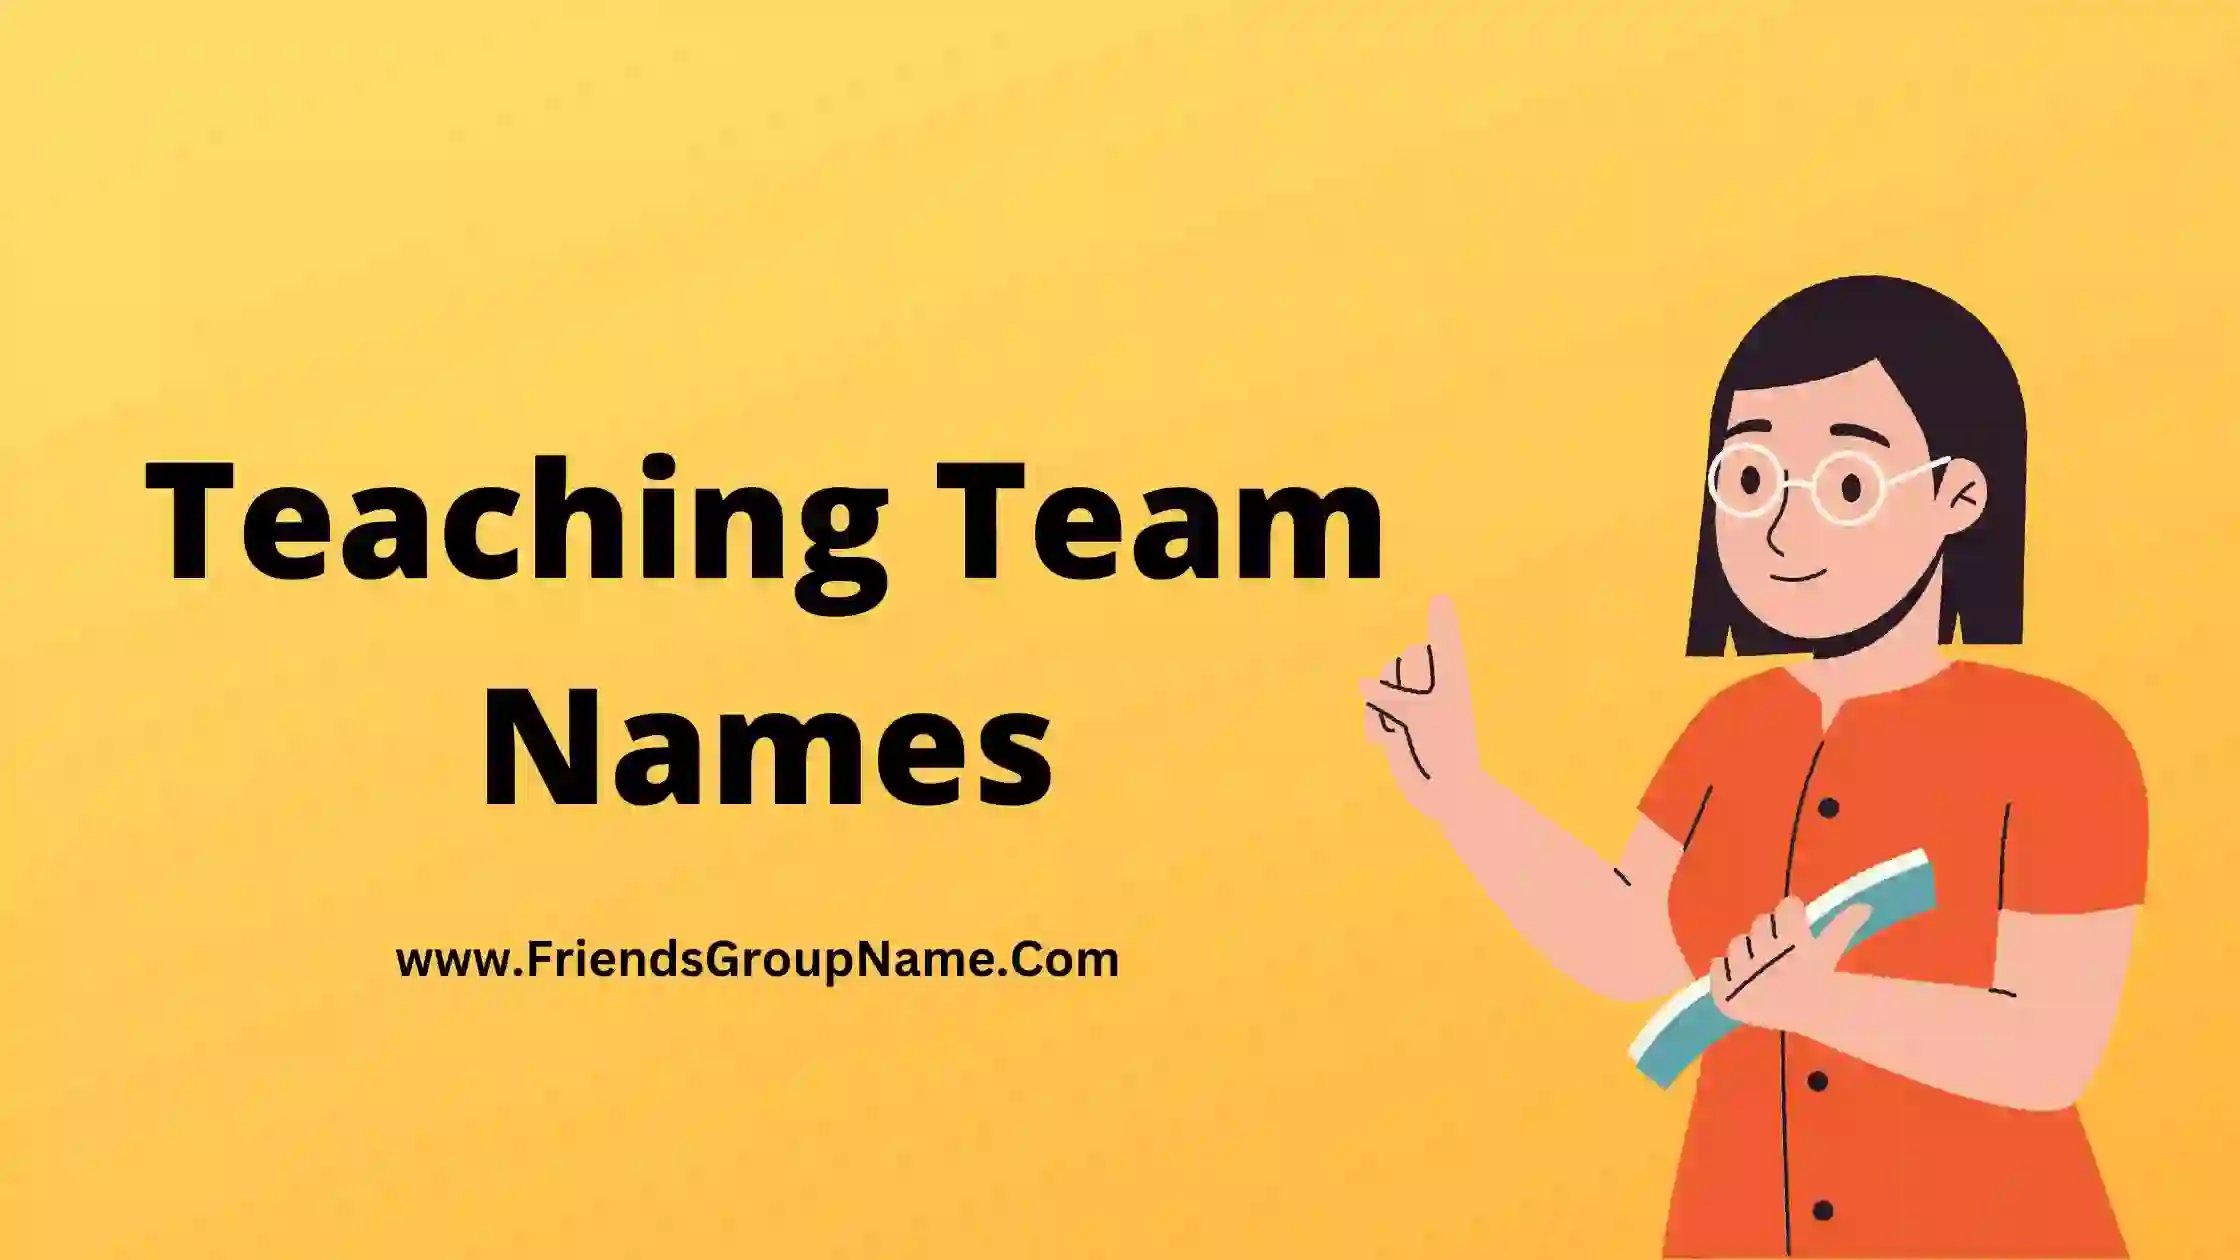 Teaching Team Names